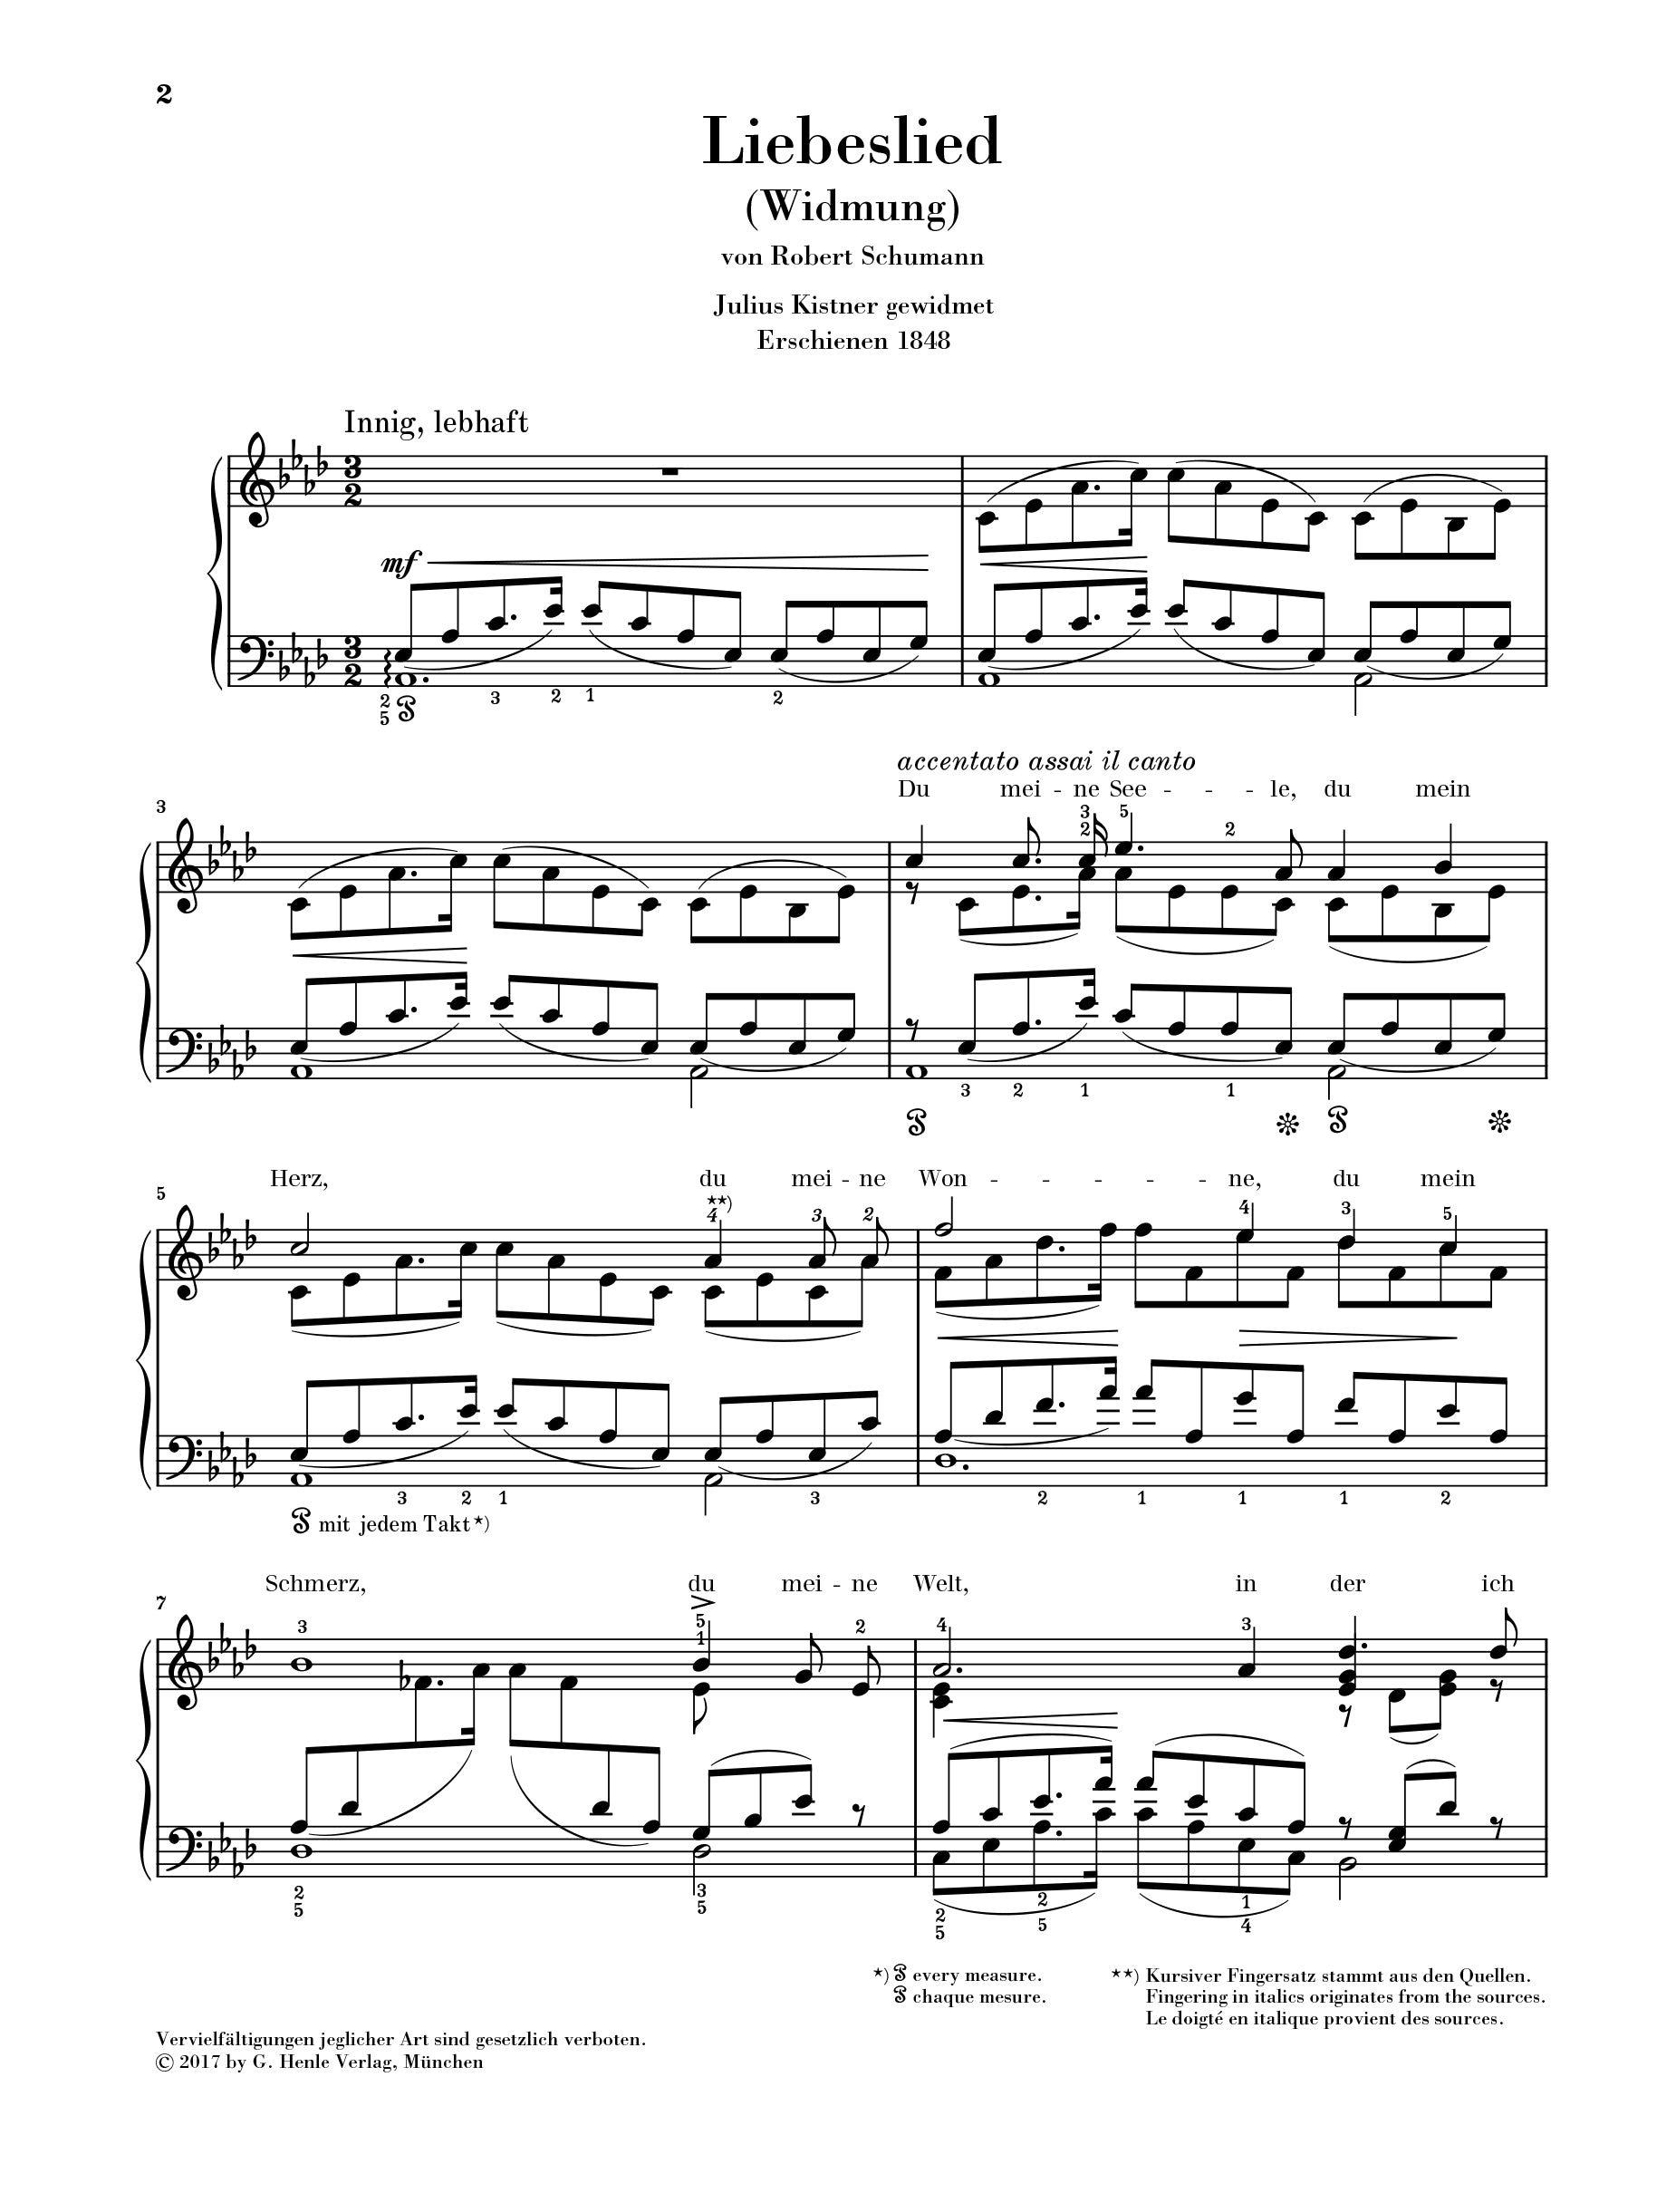 Liszt: Love Song (Dedication) from “Myrthen” op. 25 (Schumann) Piano Solo